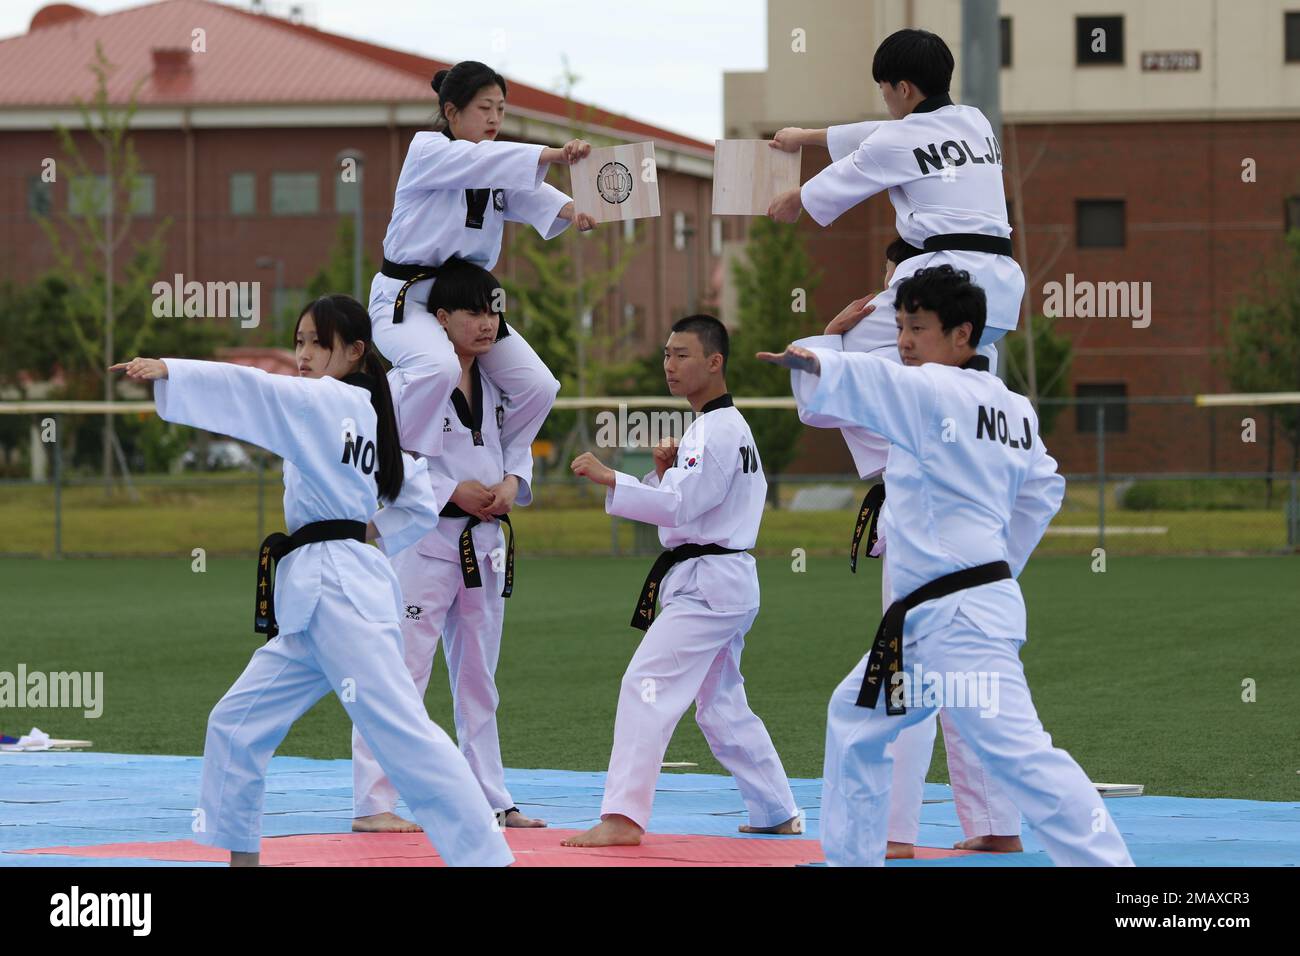 Sport TKD group  Markham Taekwondo Academy and Martial Arts